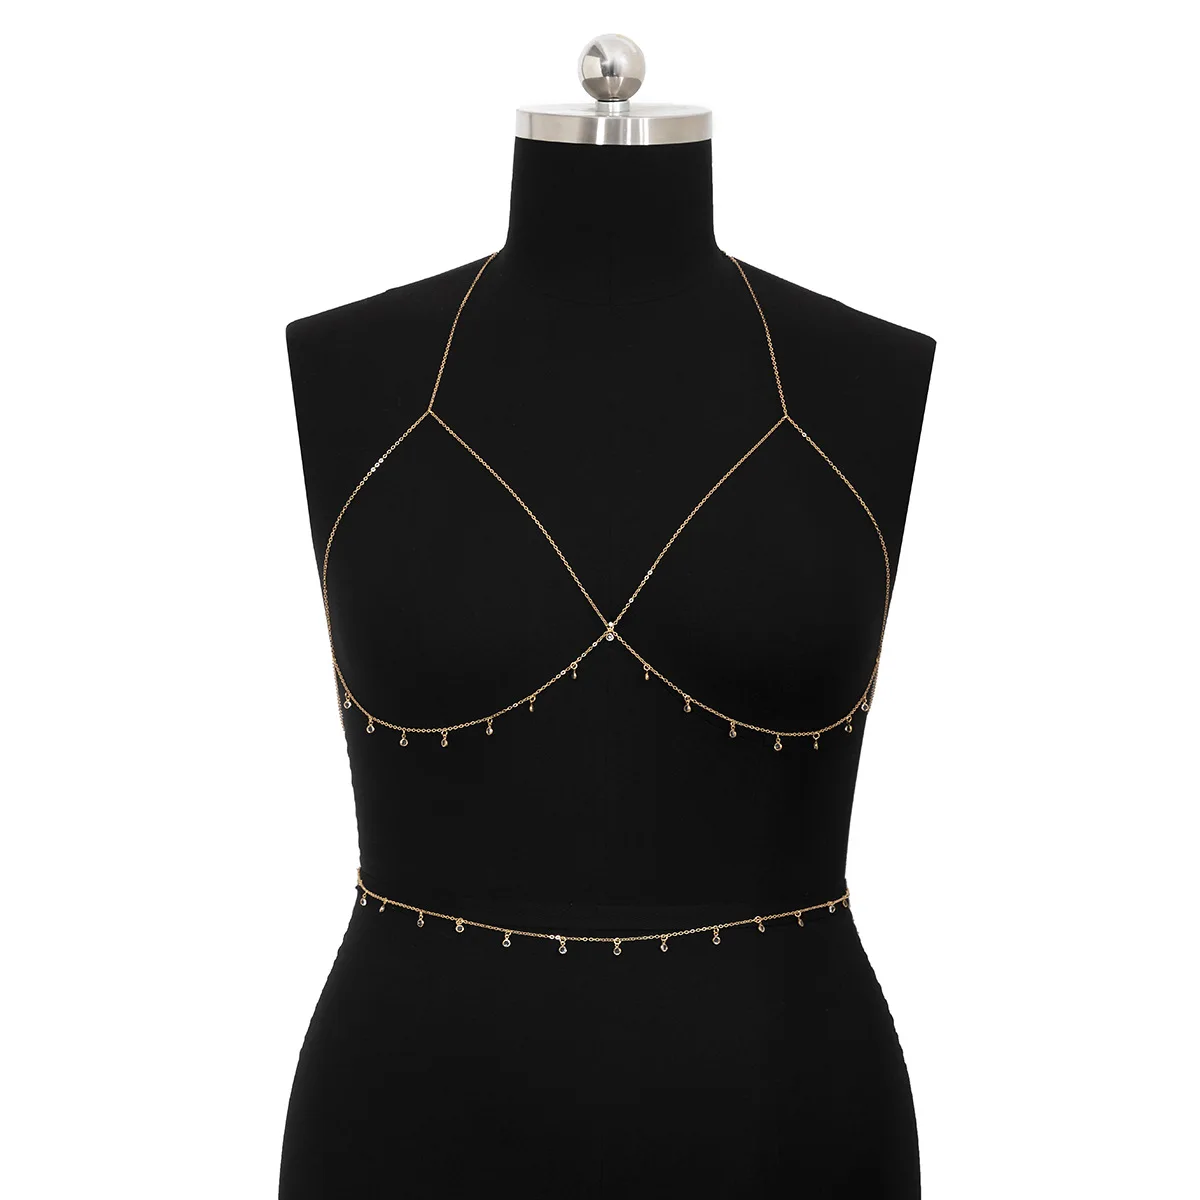 Women Bikini Tassel Rhinestone Harness Crystal Bra Chest Body Chain Necklace  Hot